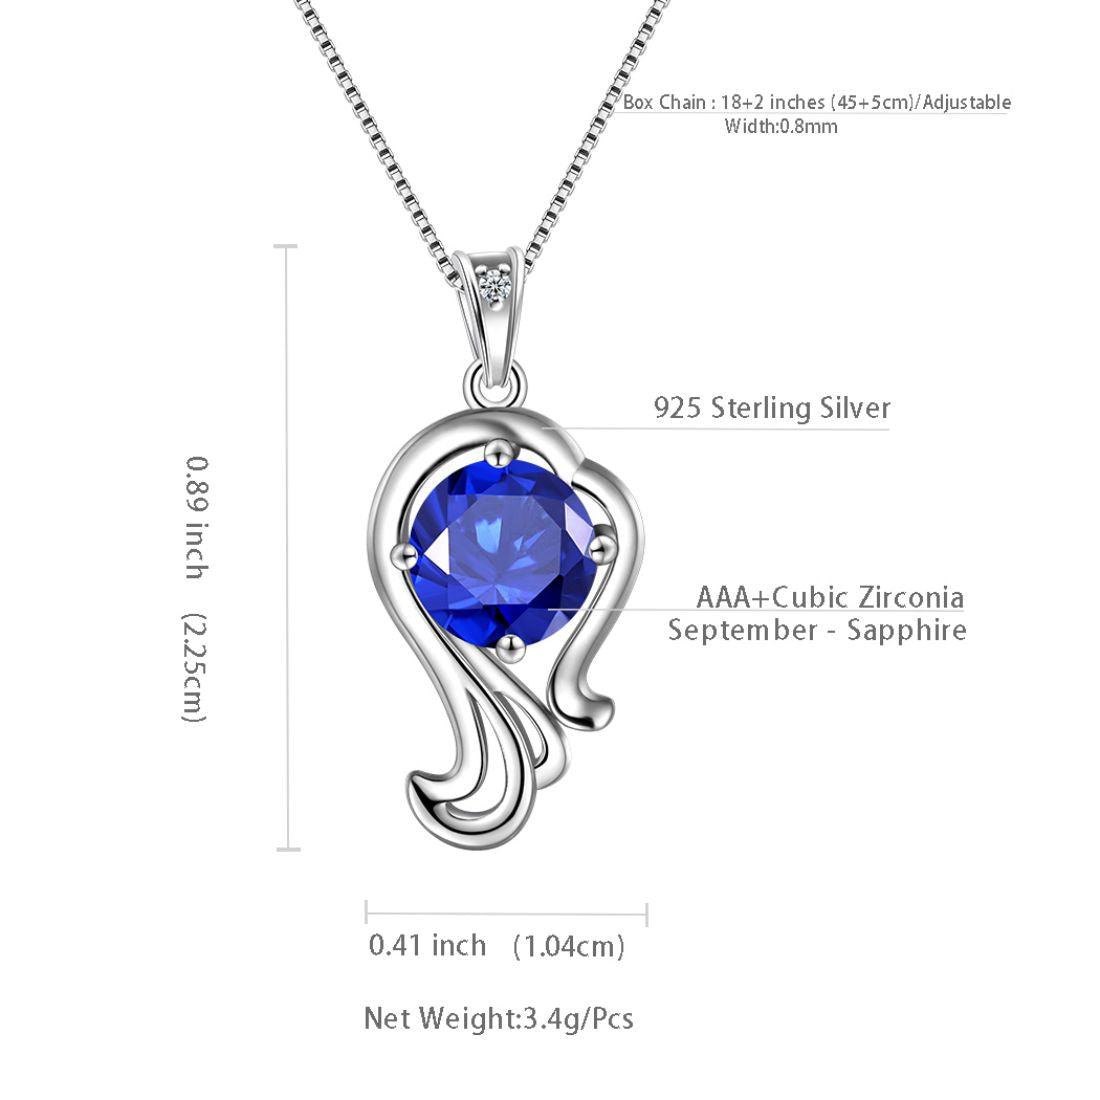 Virgo Necklace September Birthstone Pendant Crystal - Necklaces - Aurora Tears